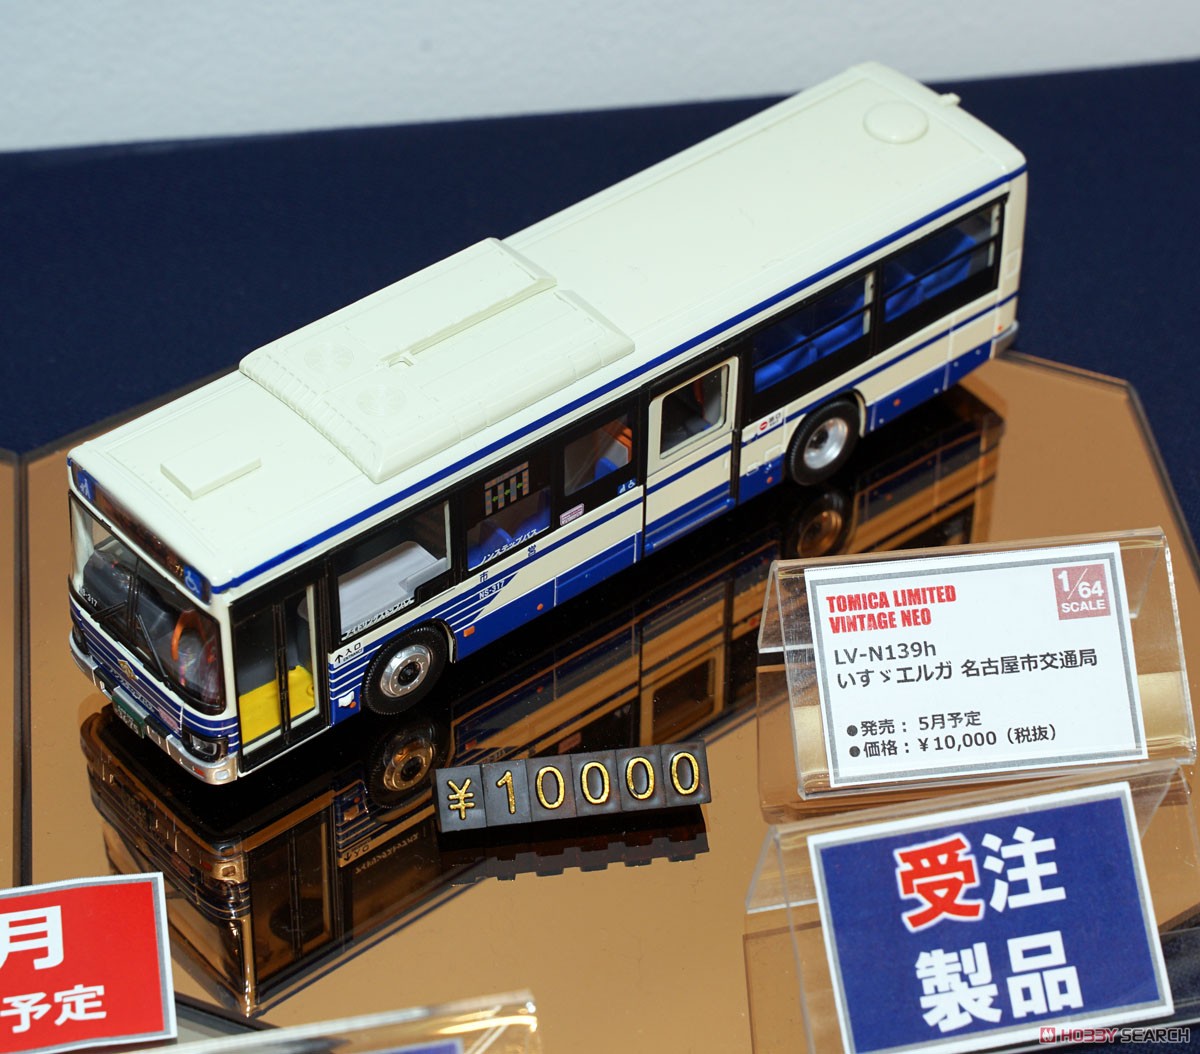 TLV-N139g Isuzu Erga Transportation Bureau City of Nagoya (Diecast Car) Other picture3